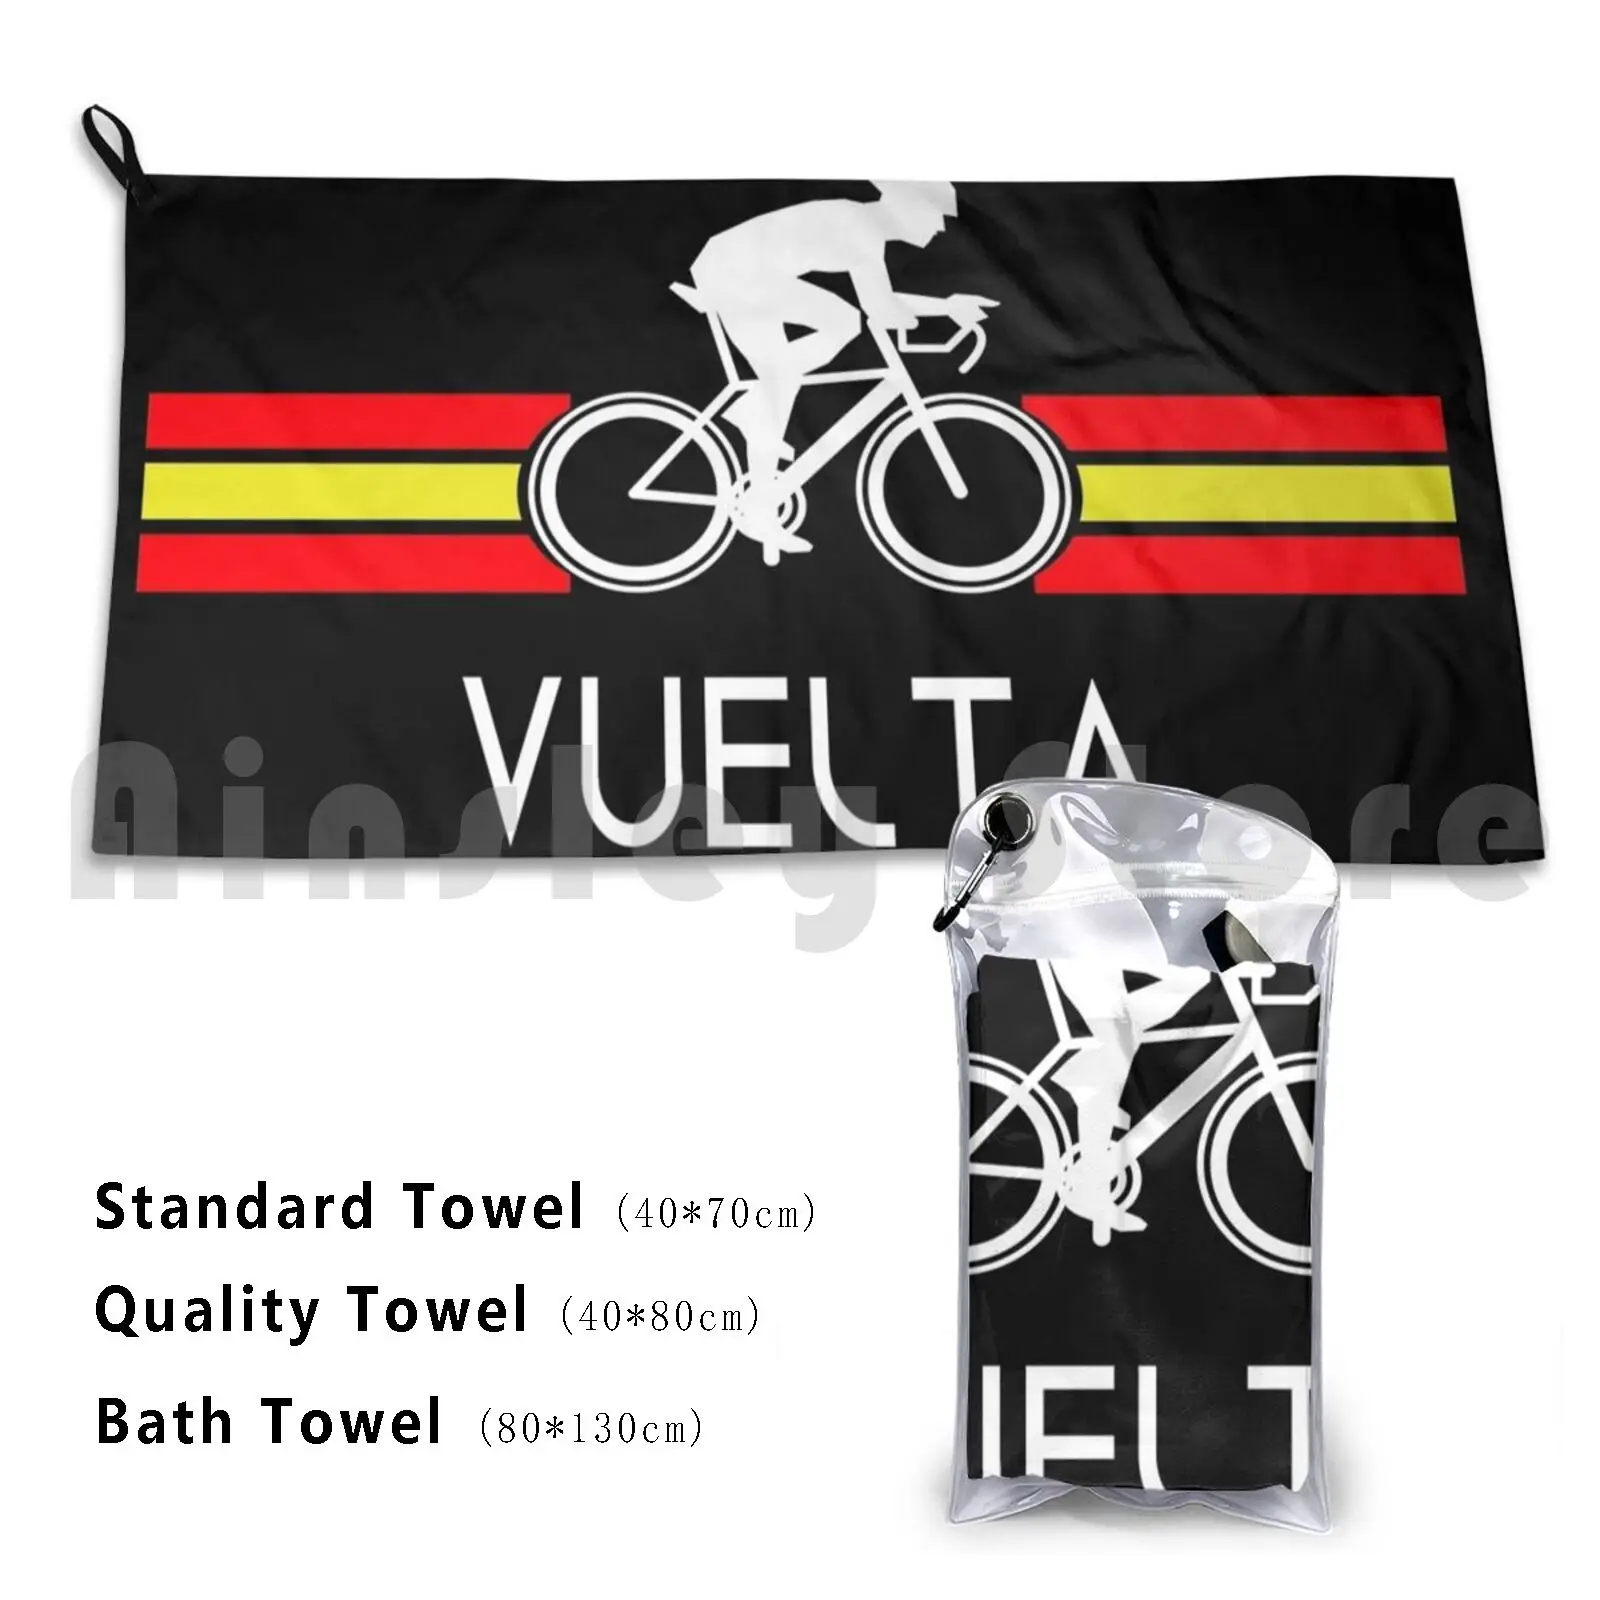 

Vuelta Espana | Road Cycling Art Bath Towel Beach Cushion Cycling Velo Tdf Vuelta Bicycle Cycling Cyclist